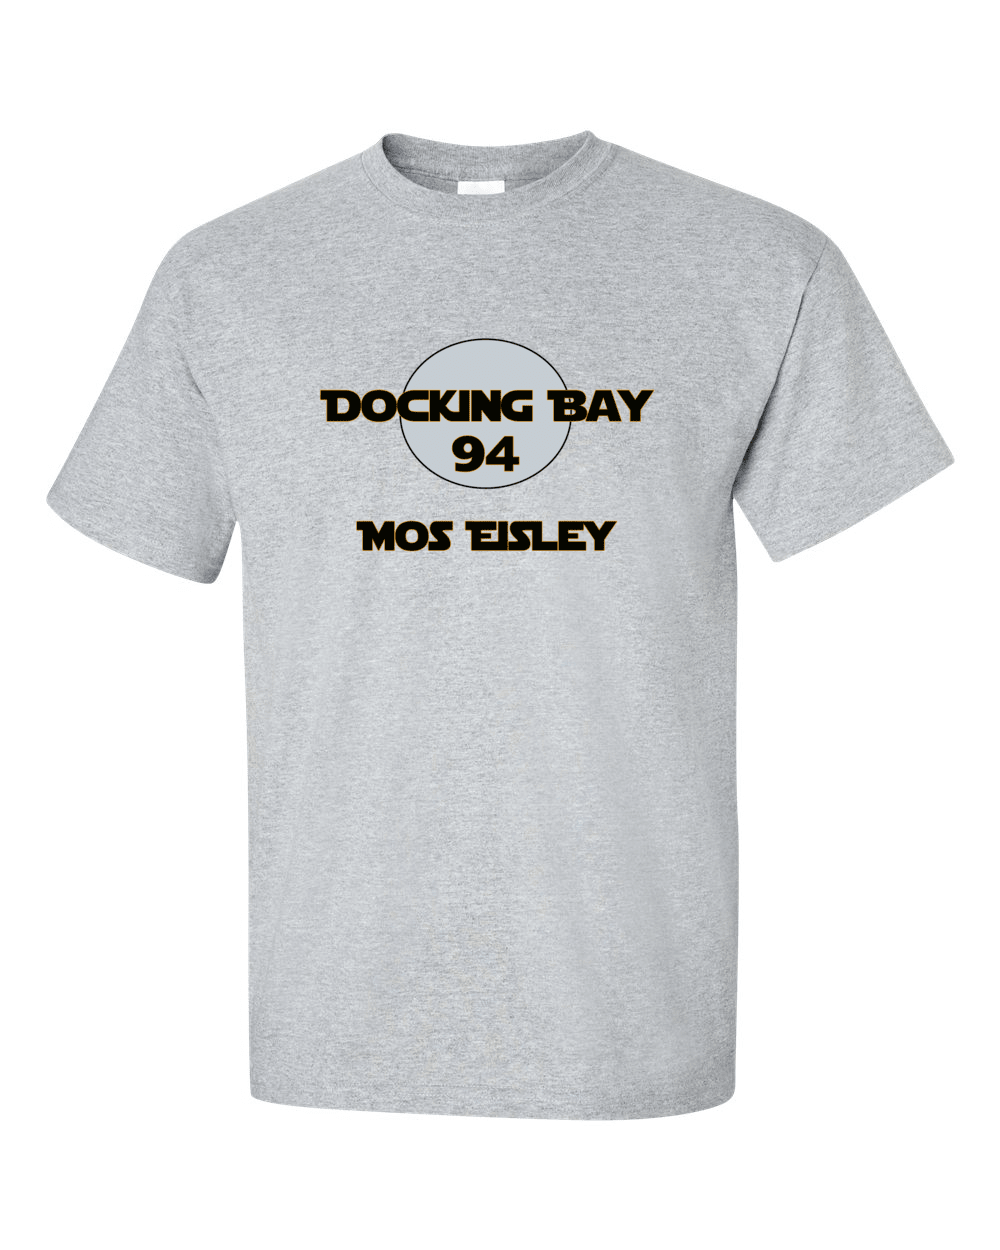 Docking Bay 94 T-Shirt - Bring Me Tacos